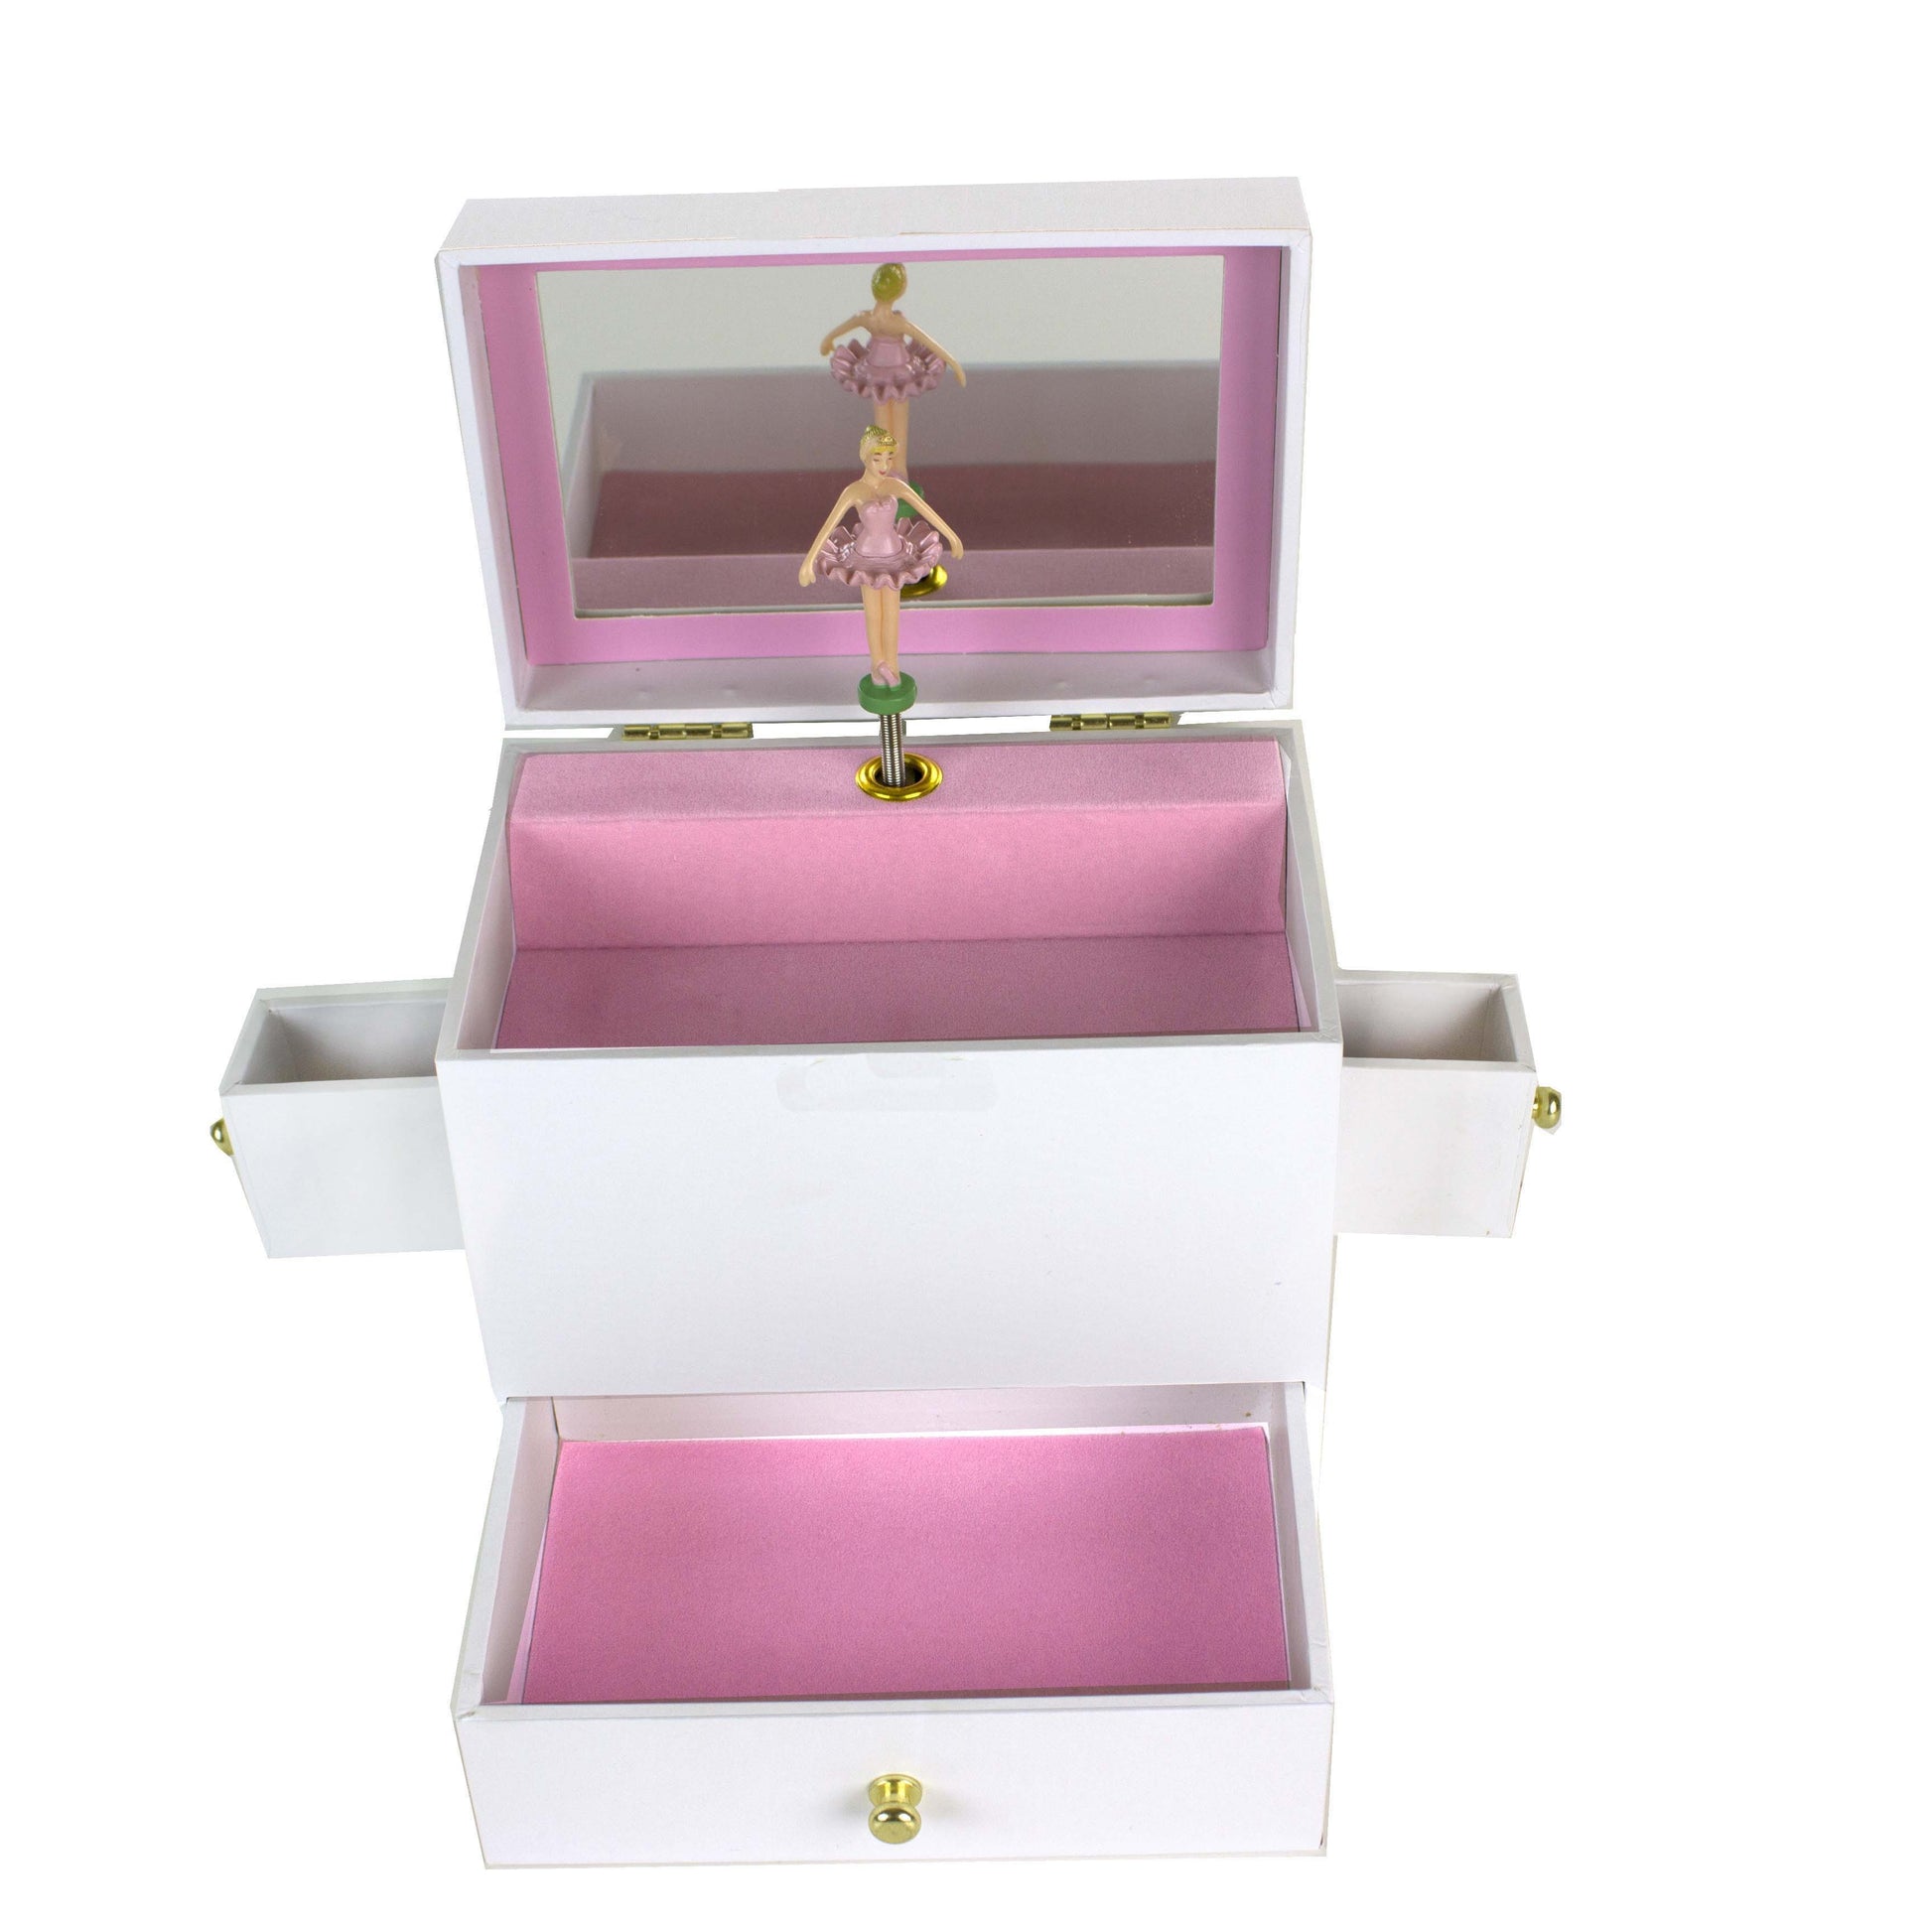 Cheerleader Deluxe Musical Ballerina Jewelry Box